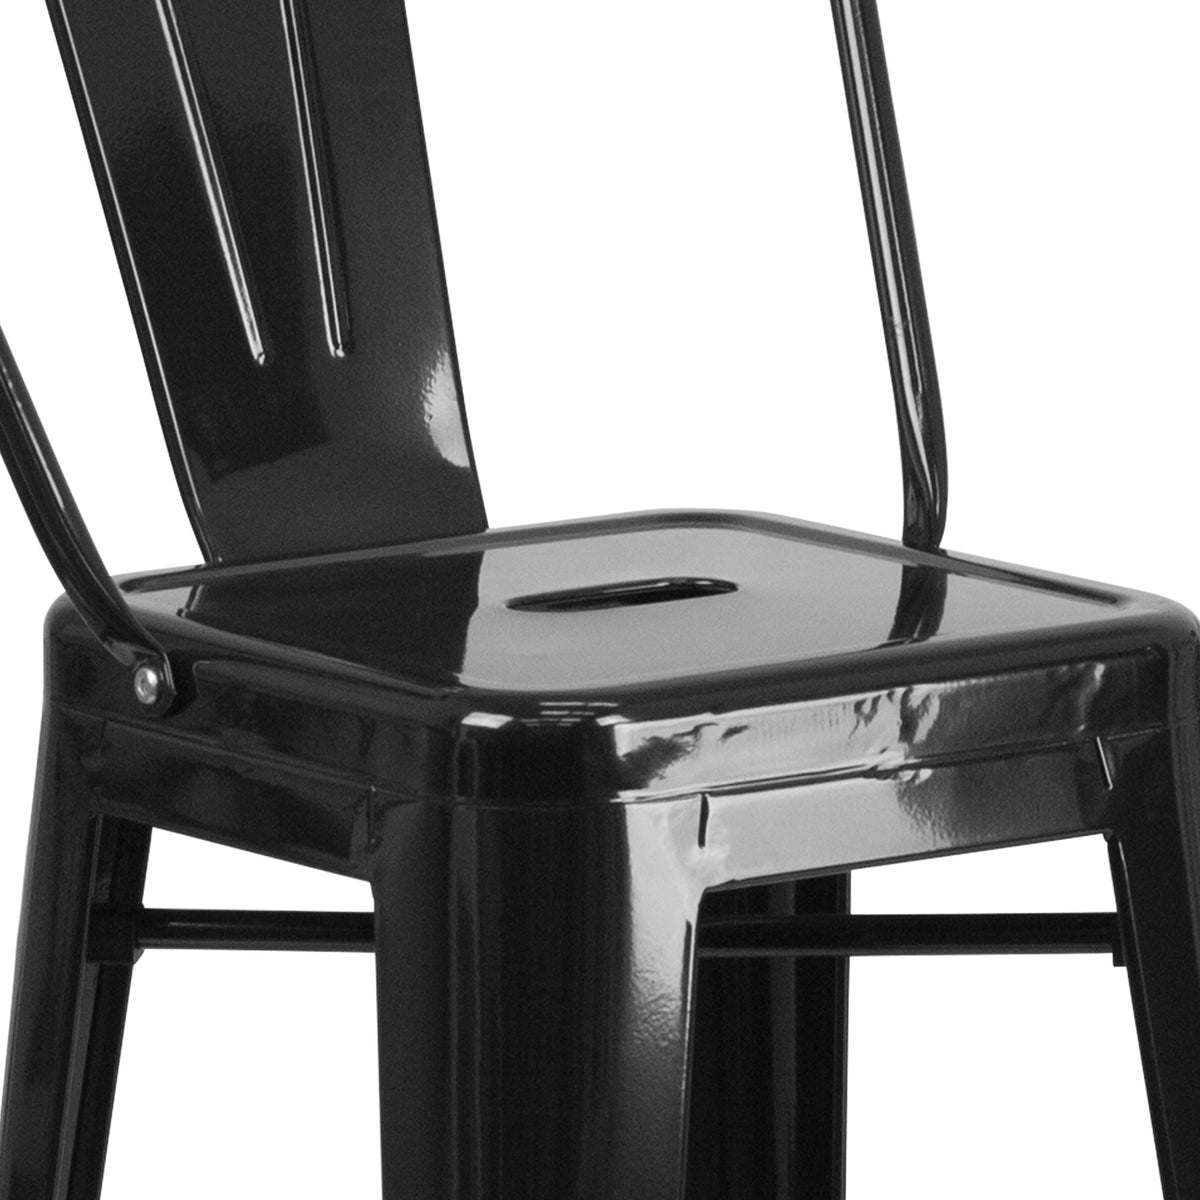 Black |#| 30inch High Black Metal Indoor-Outdoor Barstool with Back - Kitchen Furniture